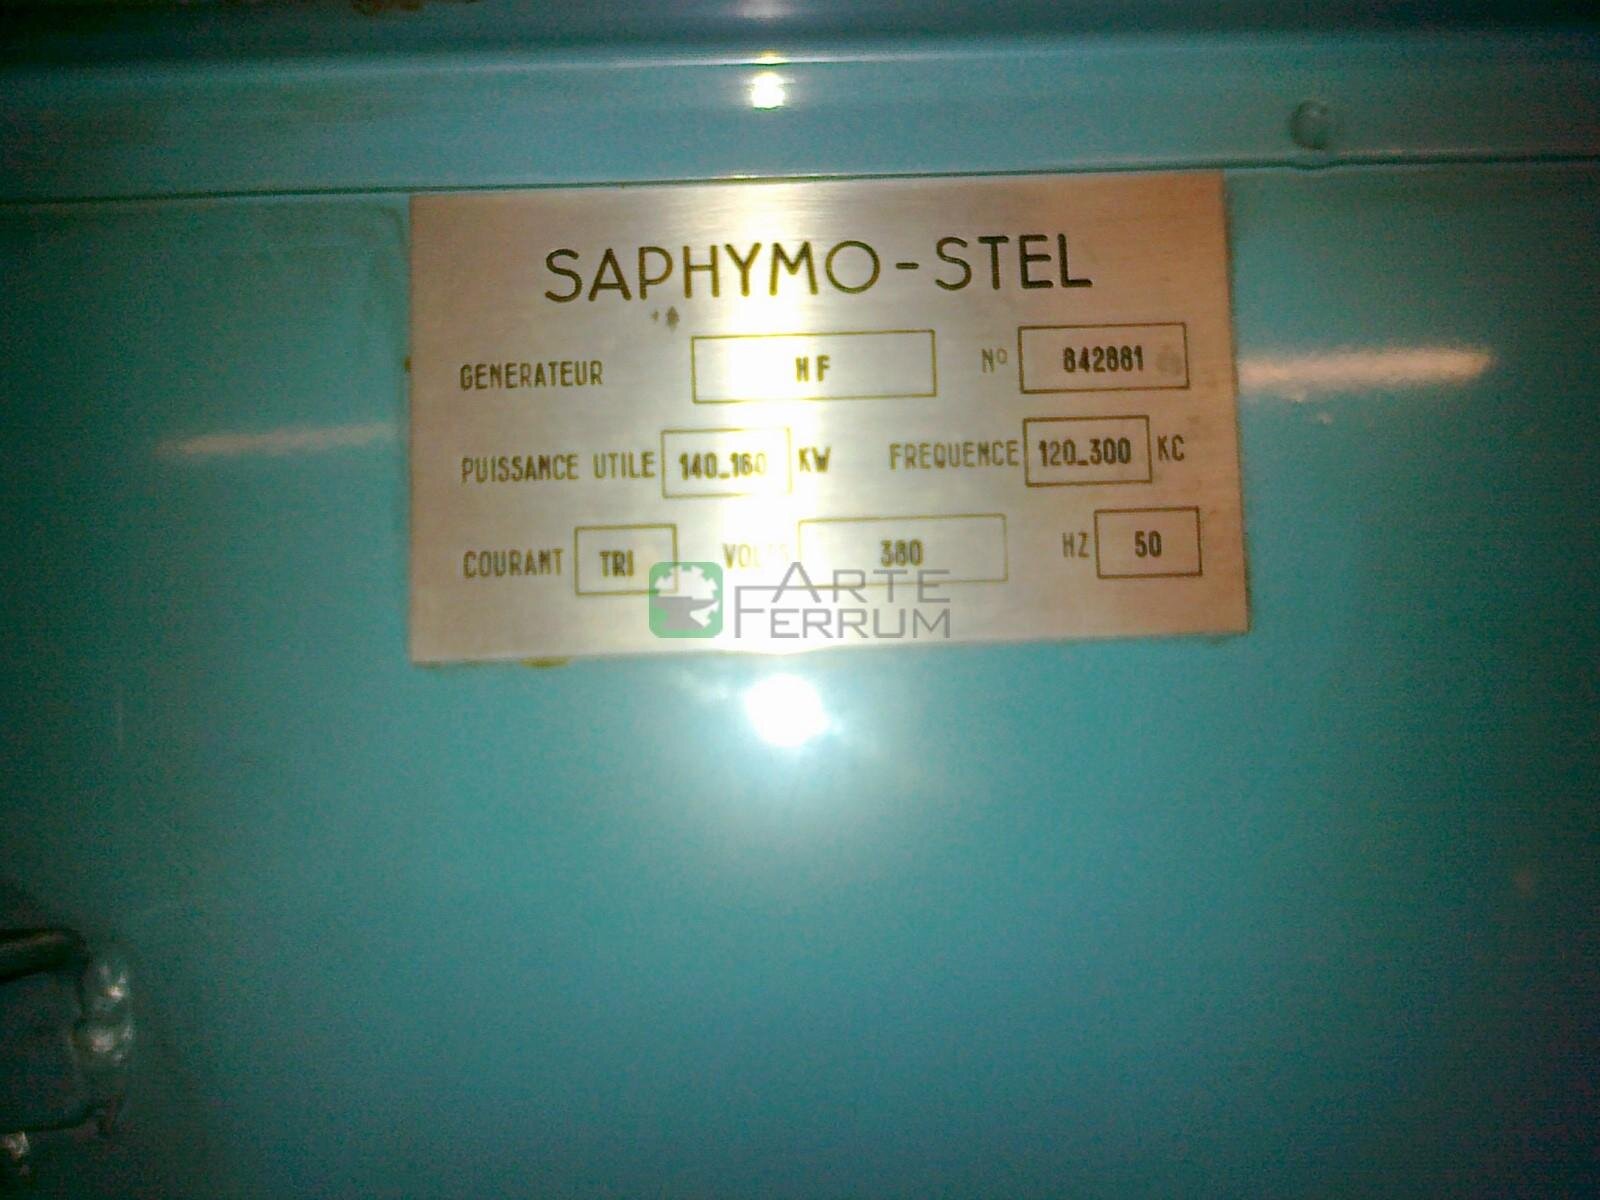 /en/saphymo-stel-hf-high-frequency-generator-160kw-detail